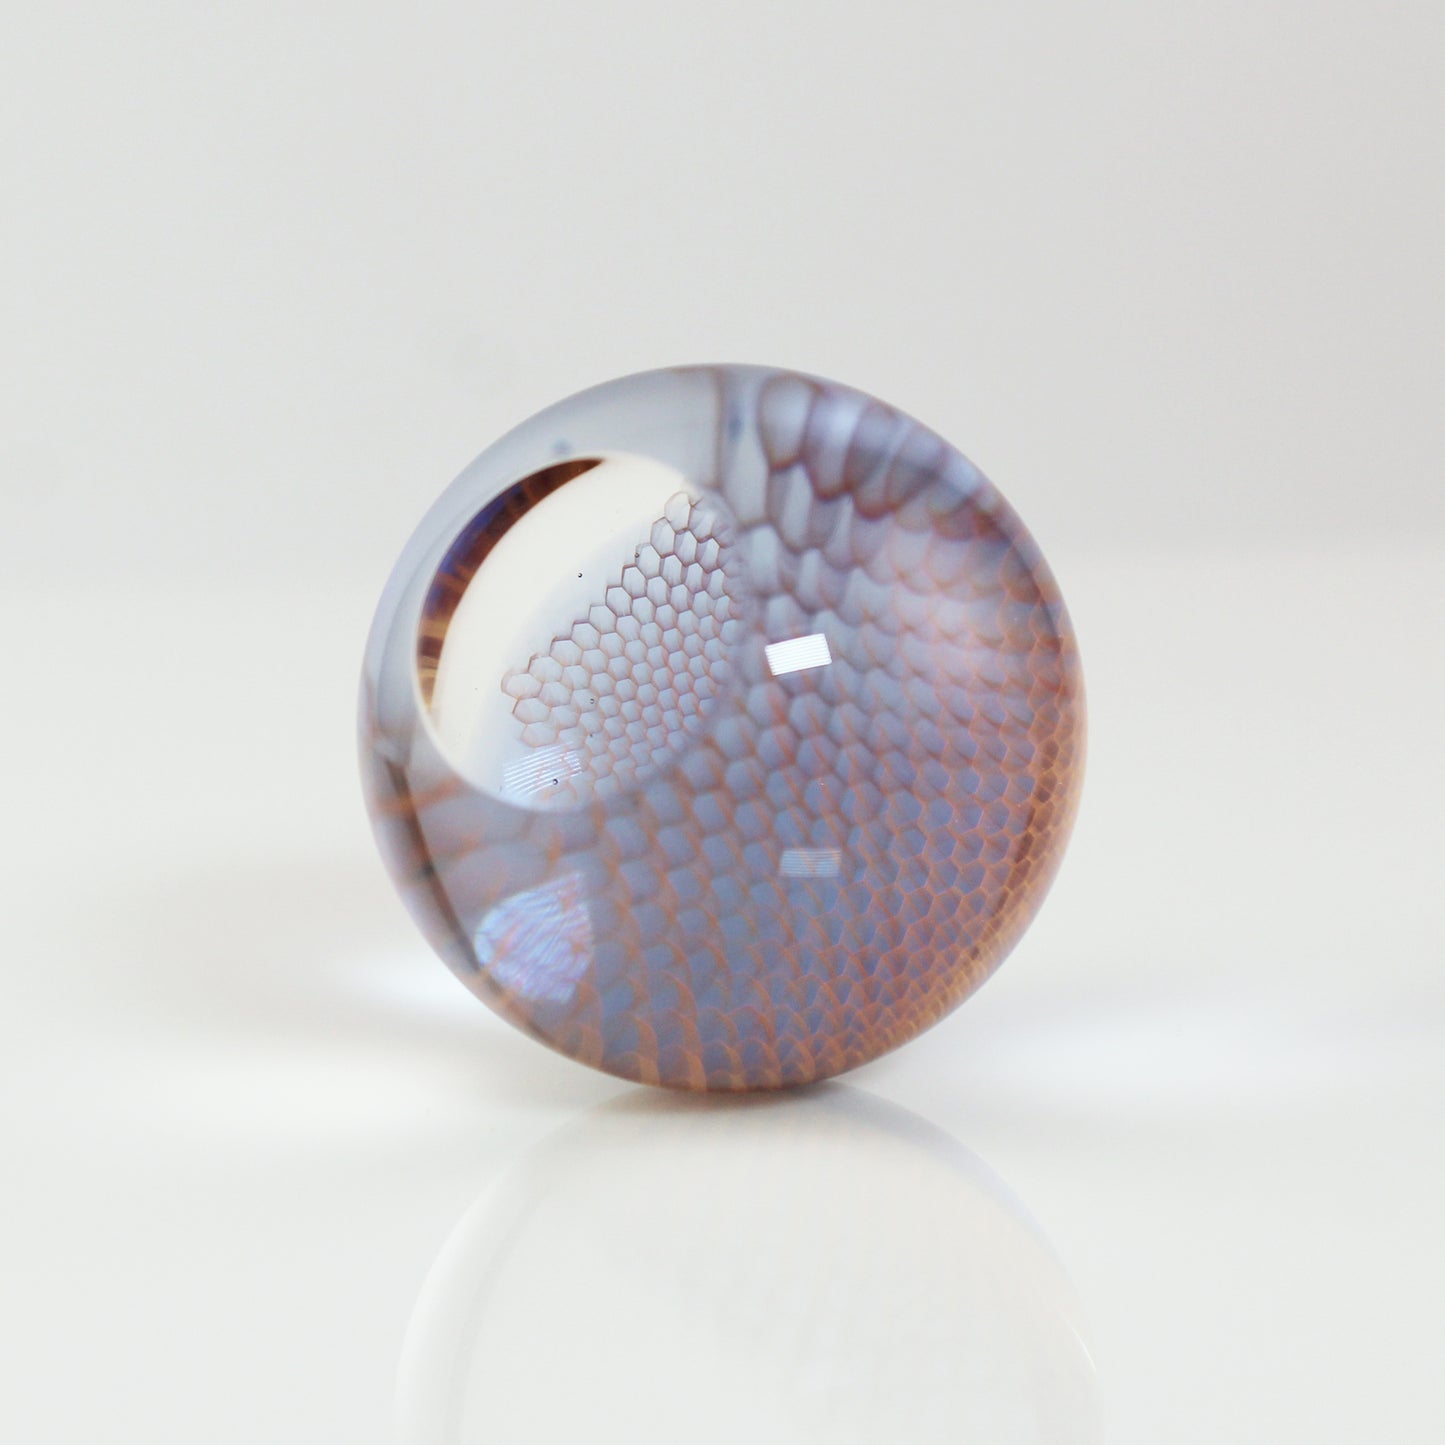 29mm Window Marble Endeavor with Light Cobalt